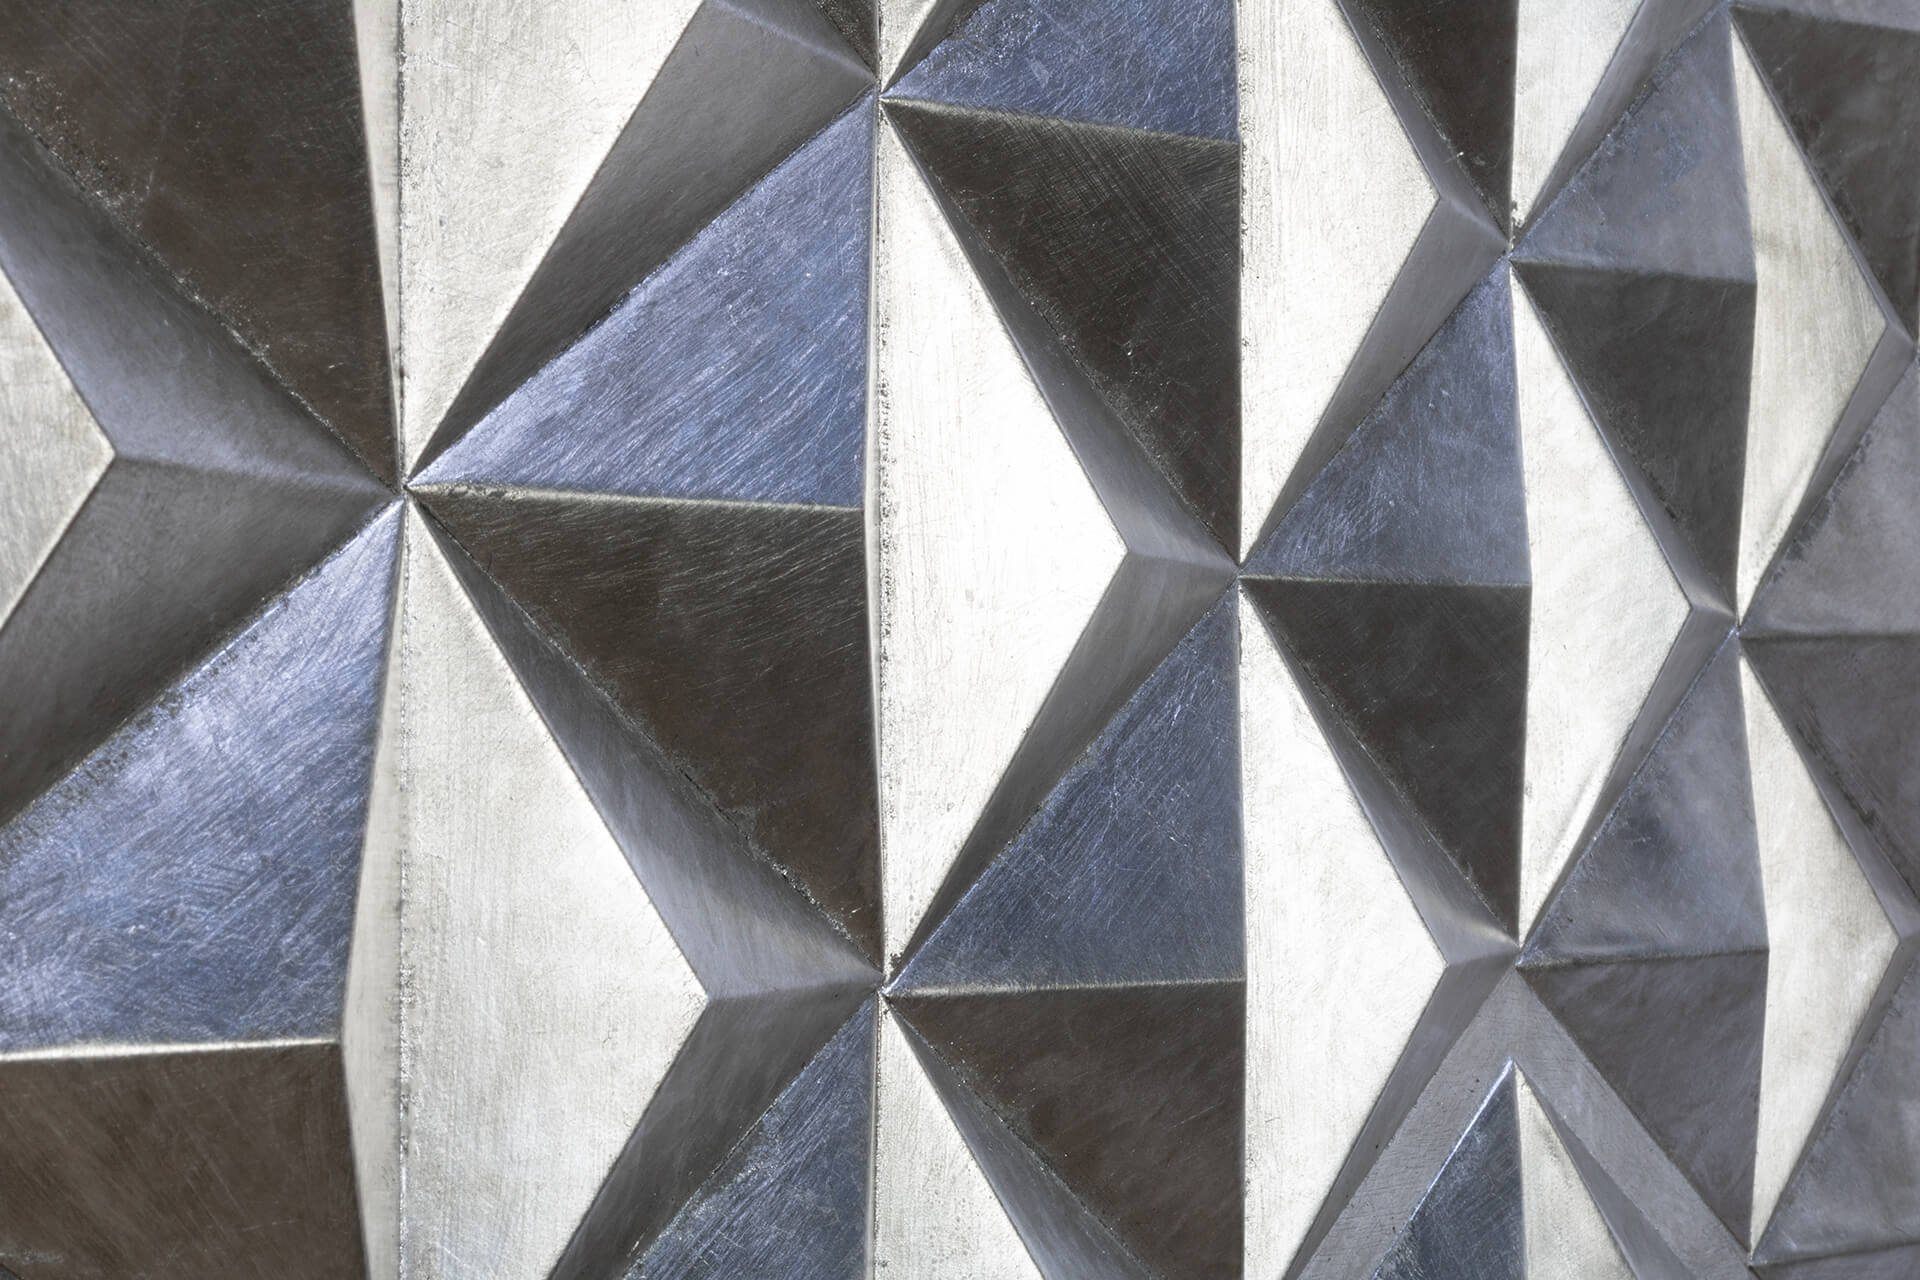 Metallbild Wandrelief Pyramidal 120x60 3D handgefertiges Illusion cm, KUNSTLOFT